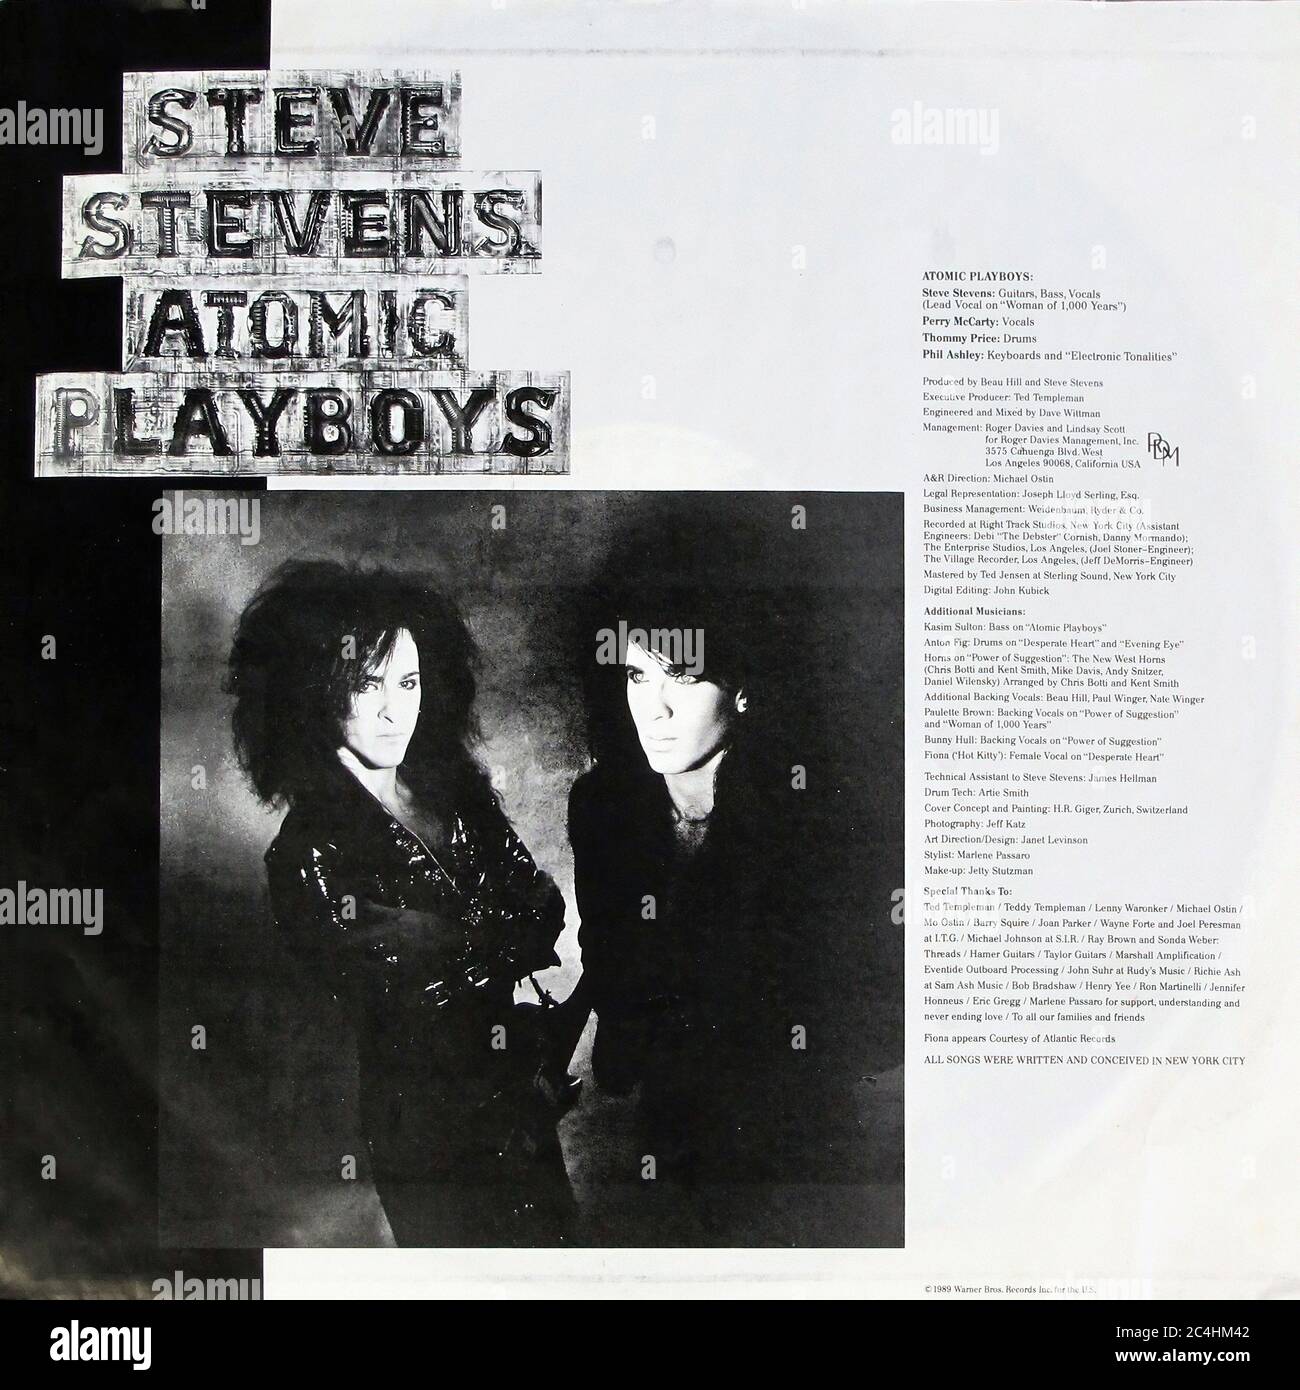 Steve Stevens Atomic Playboy's Hr Giger Billy Idol 12'' Vinyl Lp - Vintage Record Cover 02 Stock Photo